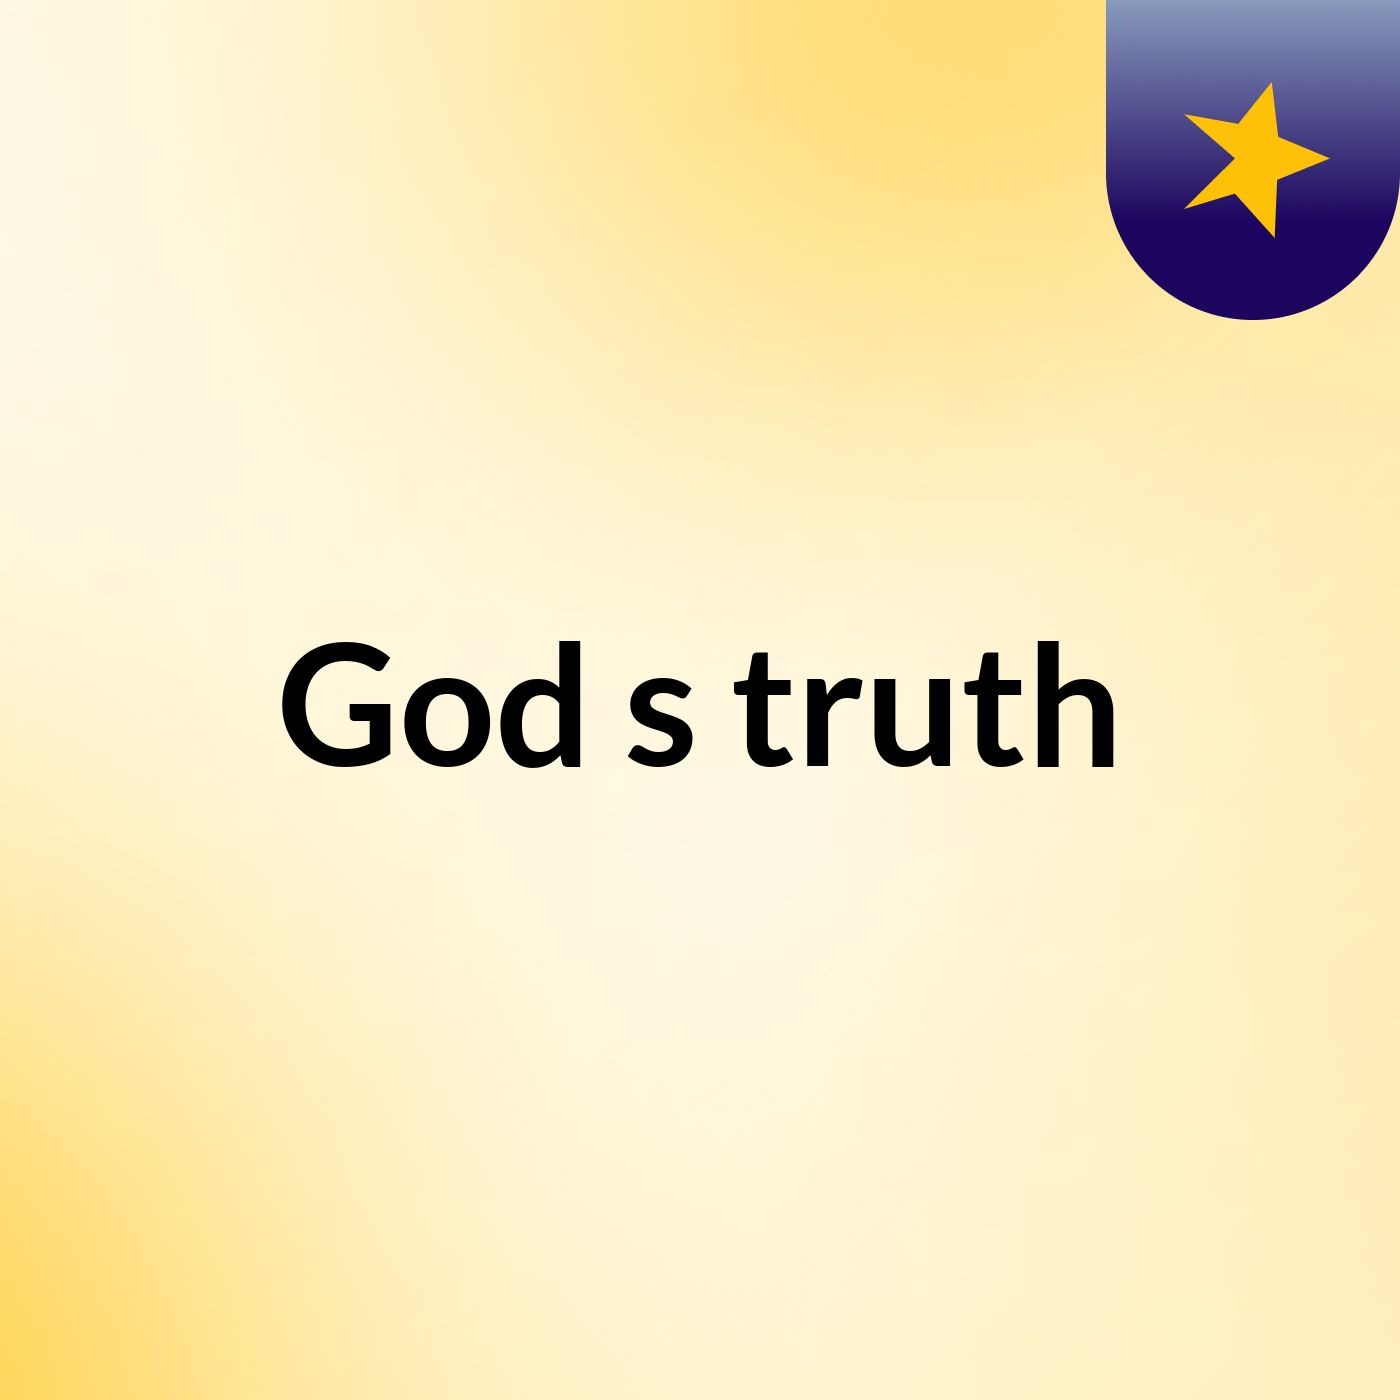 Episode 3 - God's truth